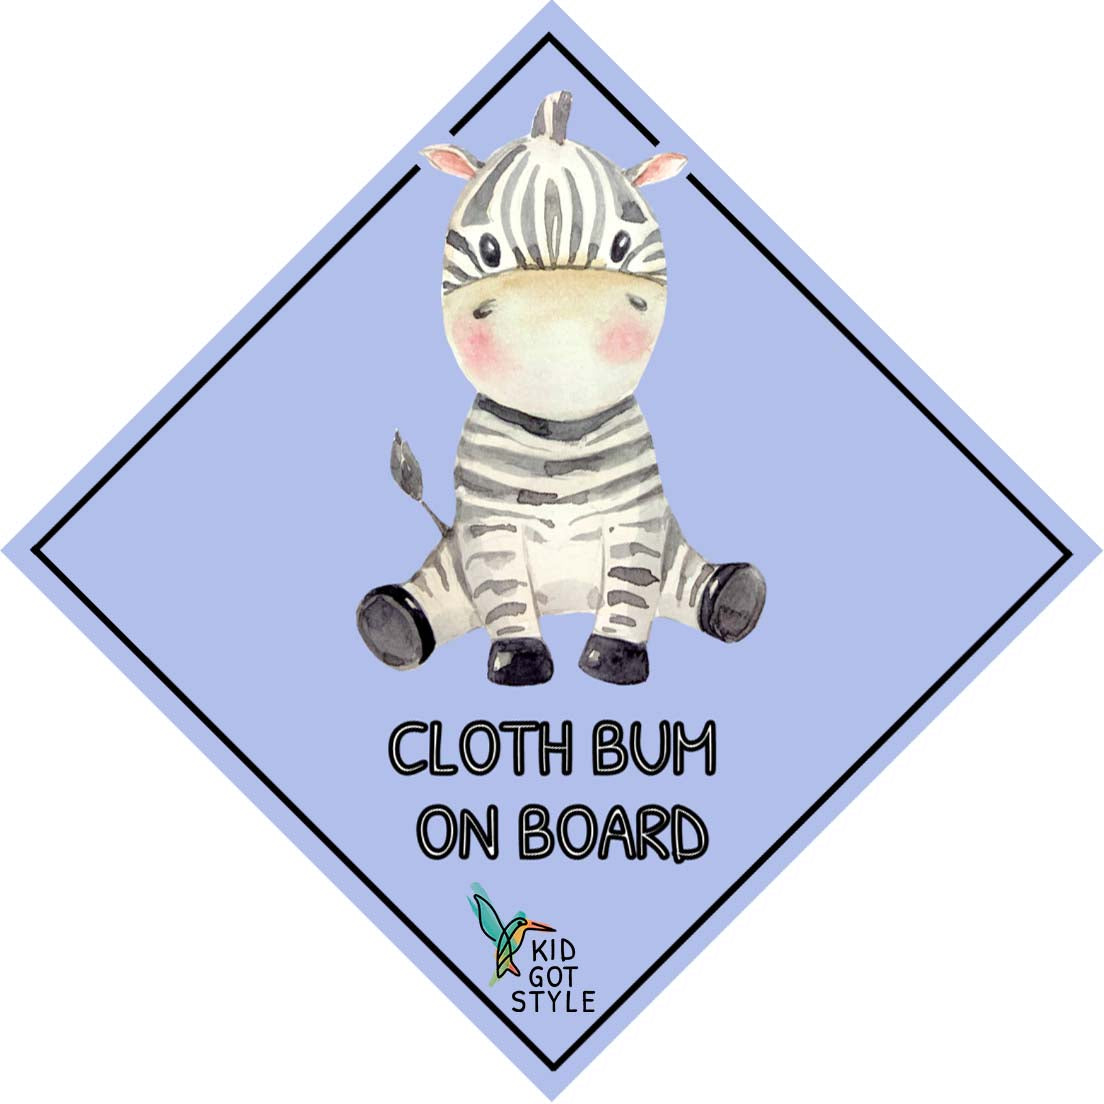 Blue cloth bum on board car sticker with a zebra